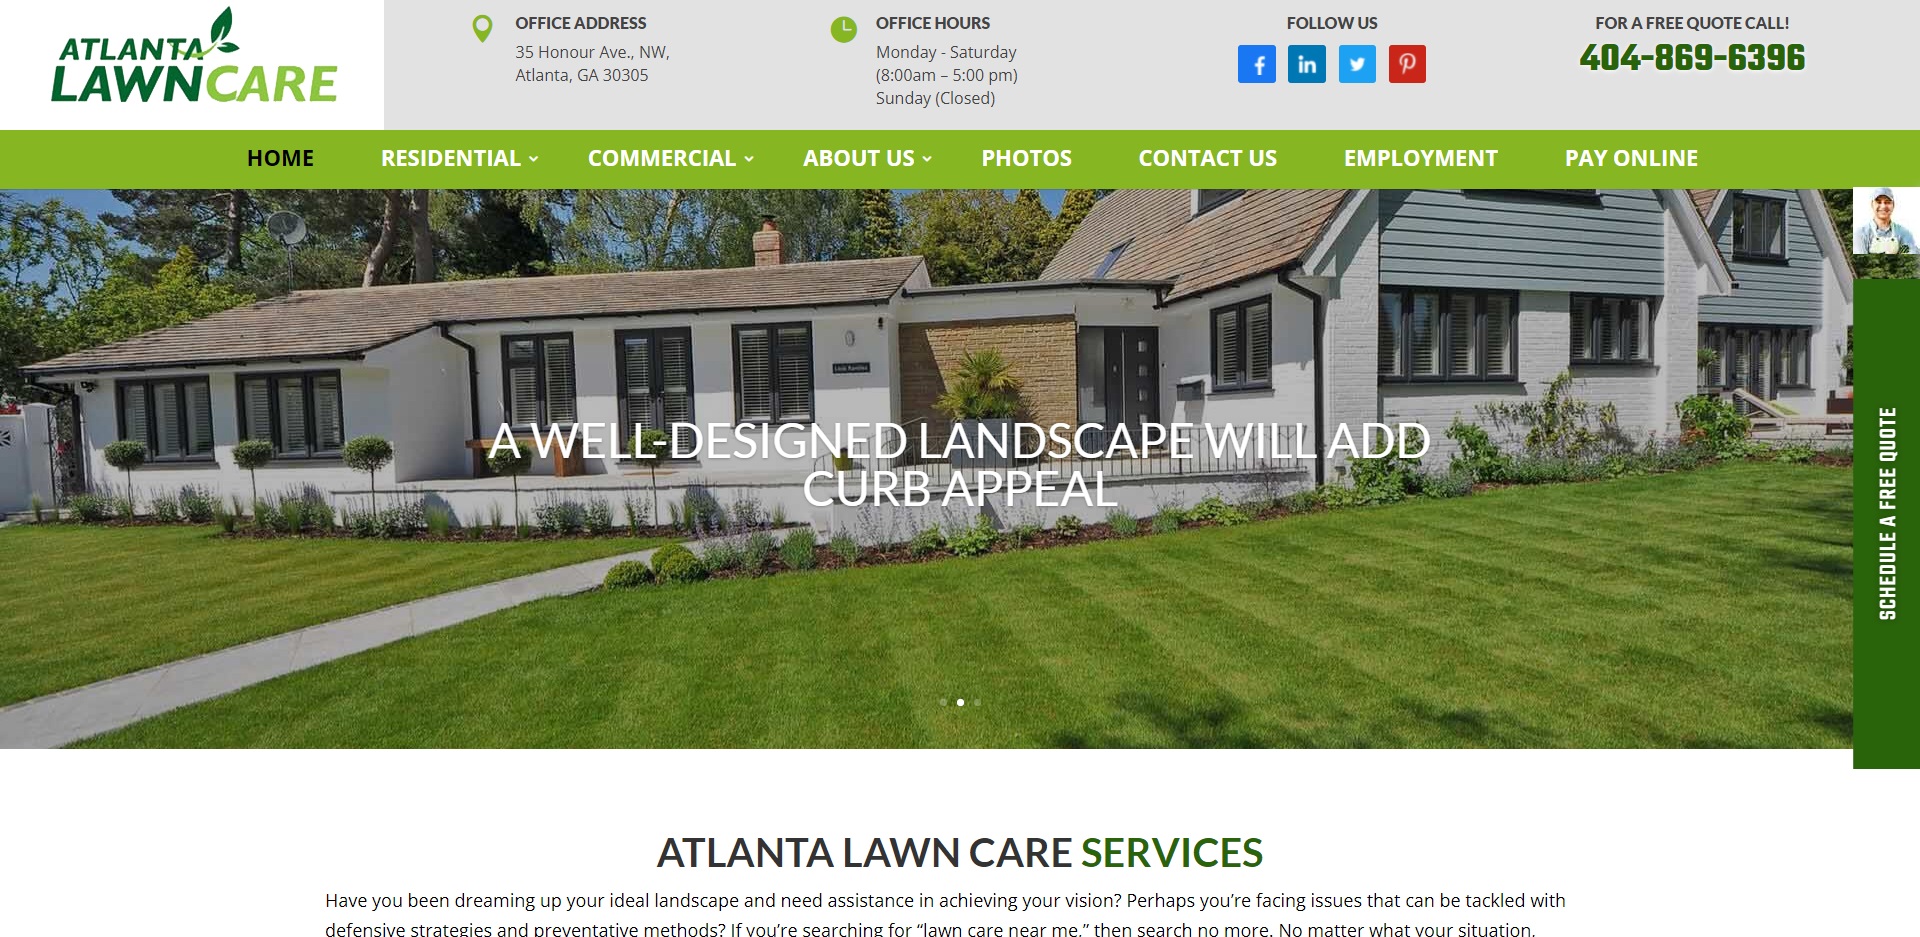 5 Best Landscaping Companies In Atlanta Ga, Top 20 Landscape Companies In Atlanta